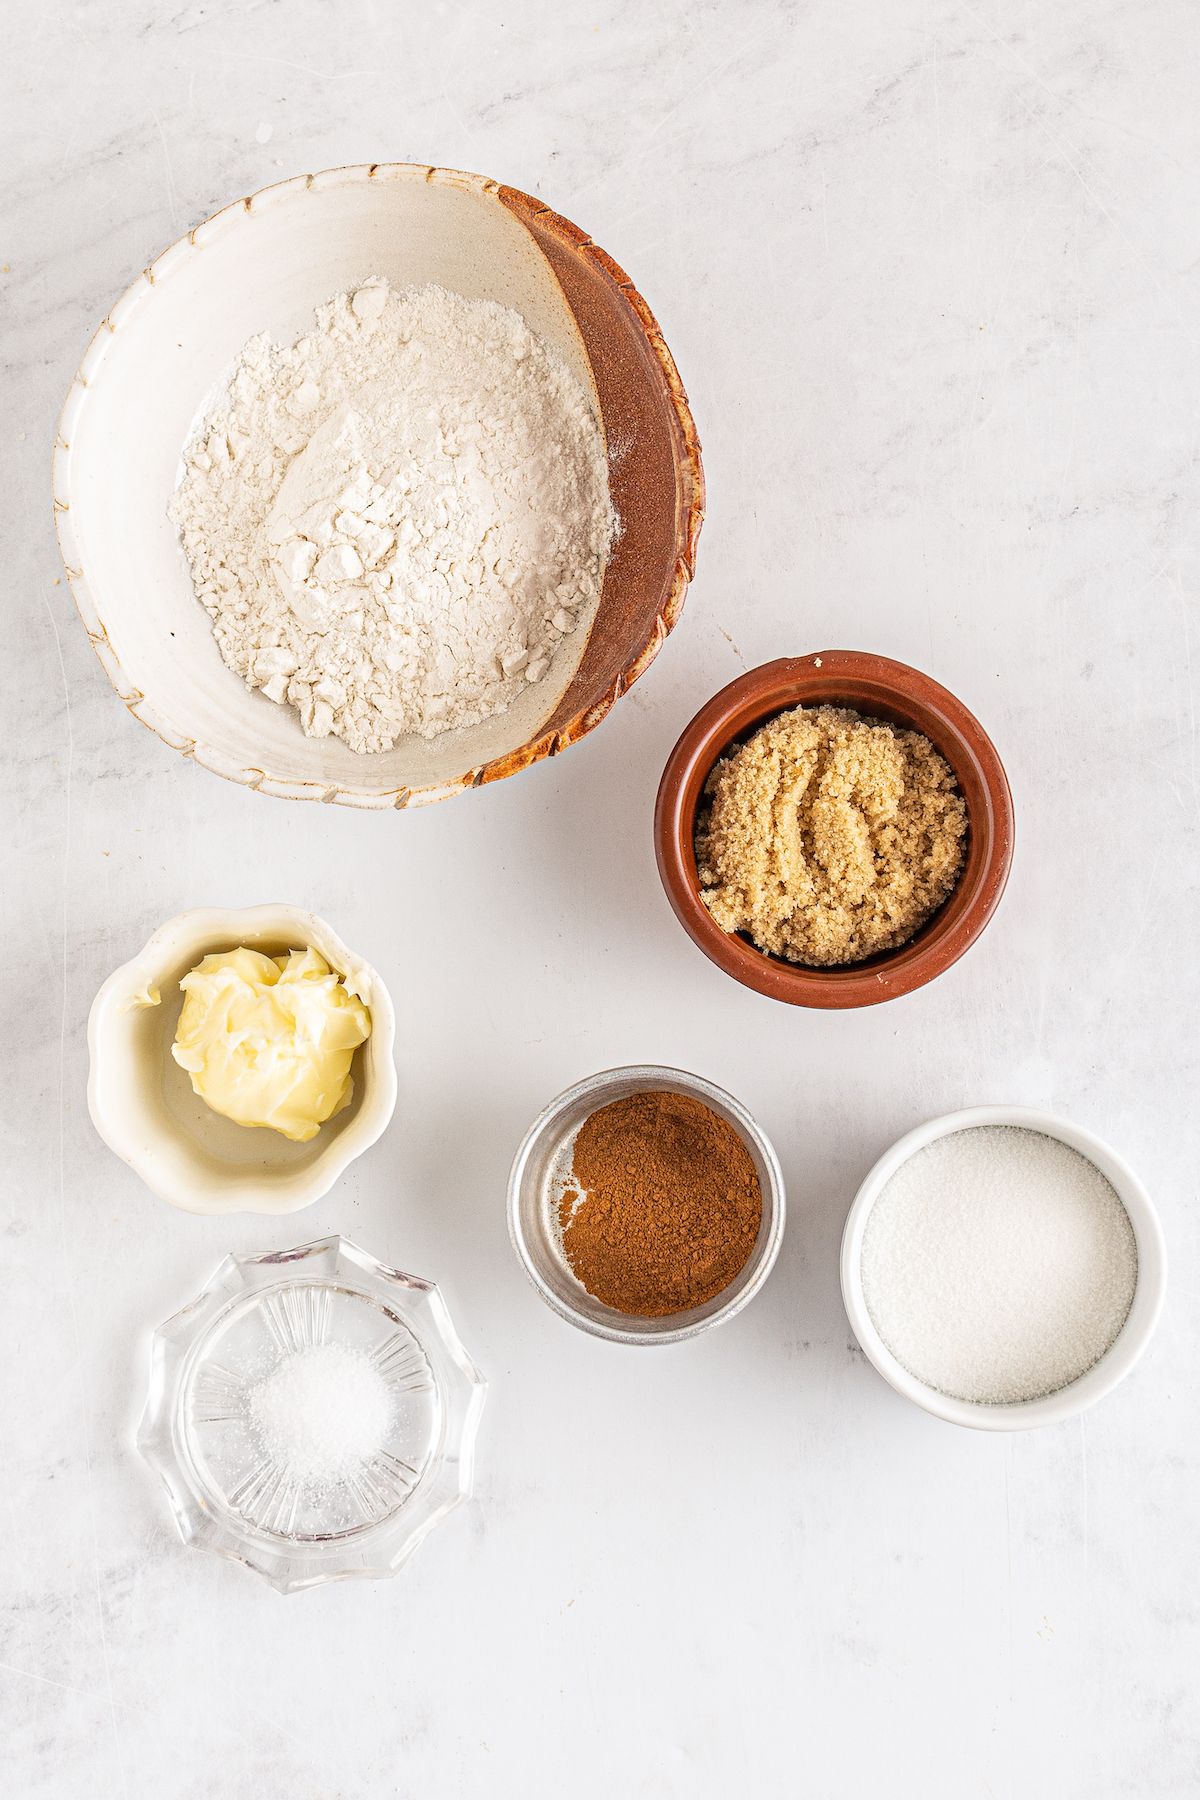 From top left: Flour, brown sugar, butter, cinnamon, granulated sugar, salt.